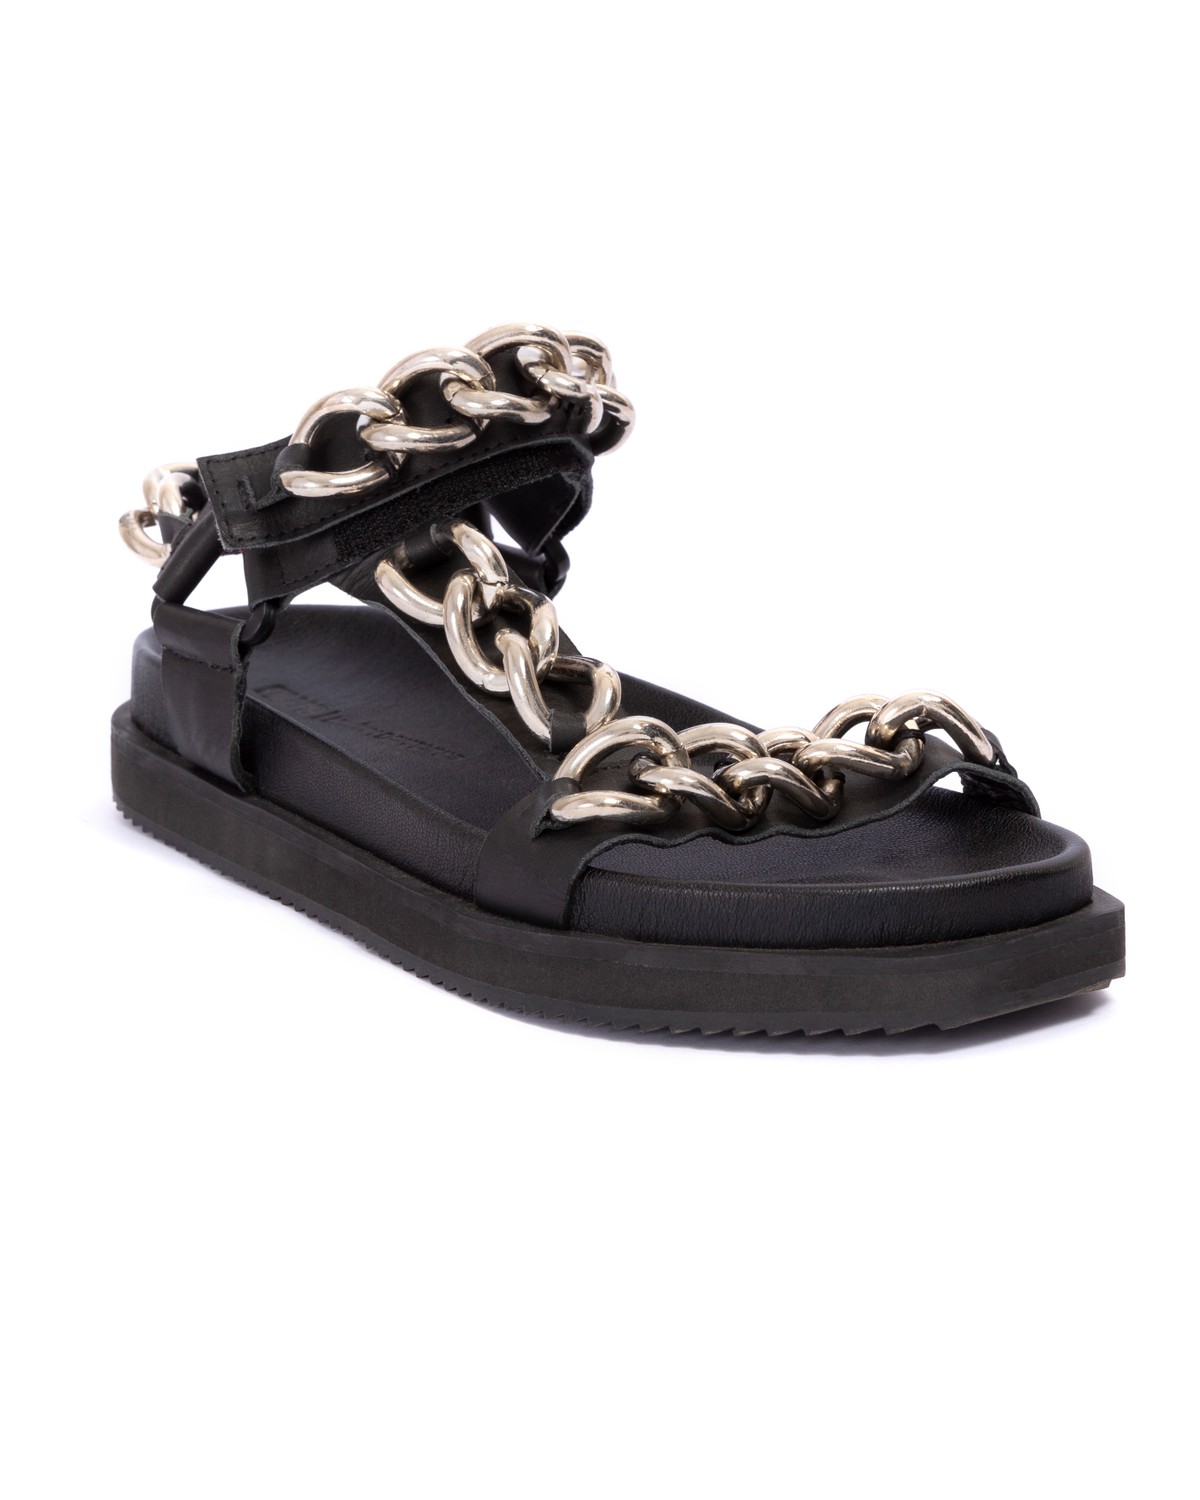 sandália em couro com correntes | leather sandals with chain detail